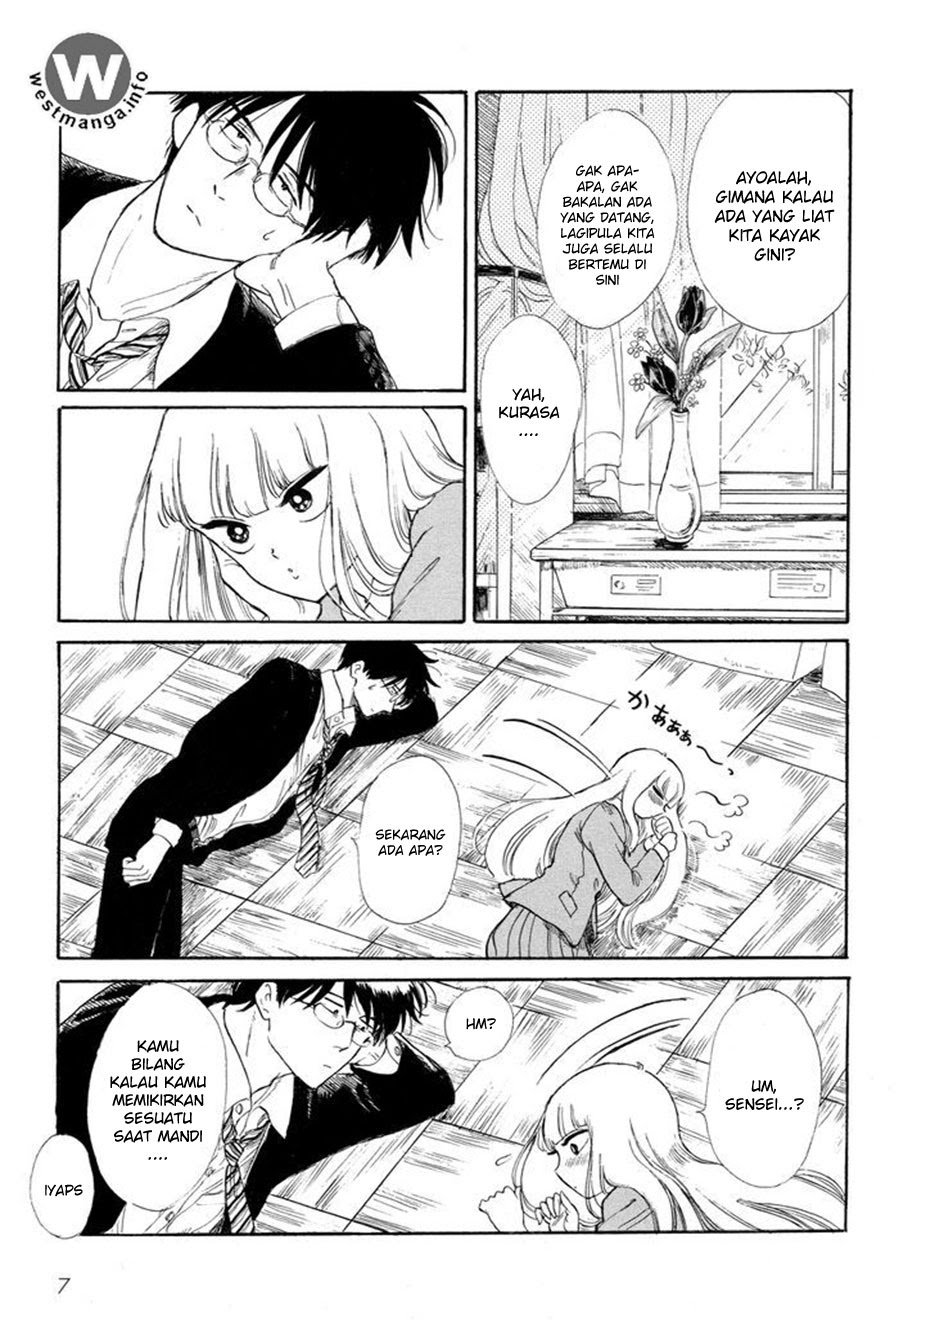 Baca Shiota-sensei to Amai-chan Chapter 1  - GudangKomik